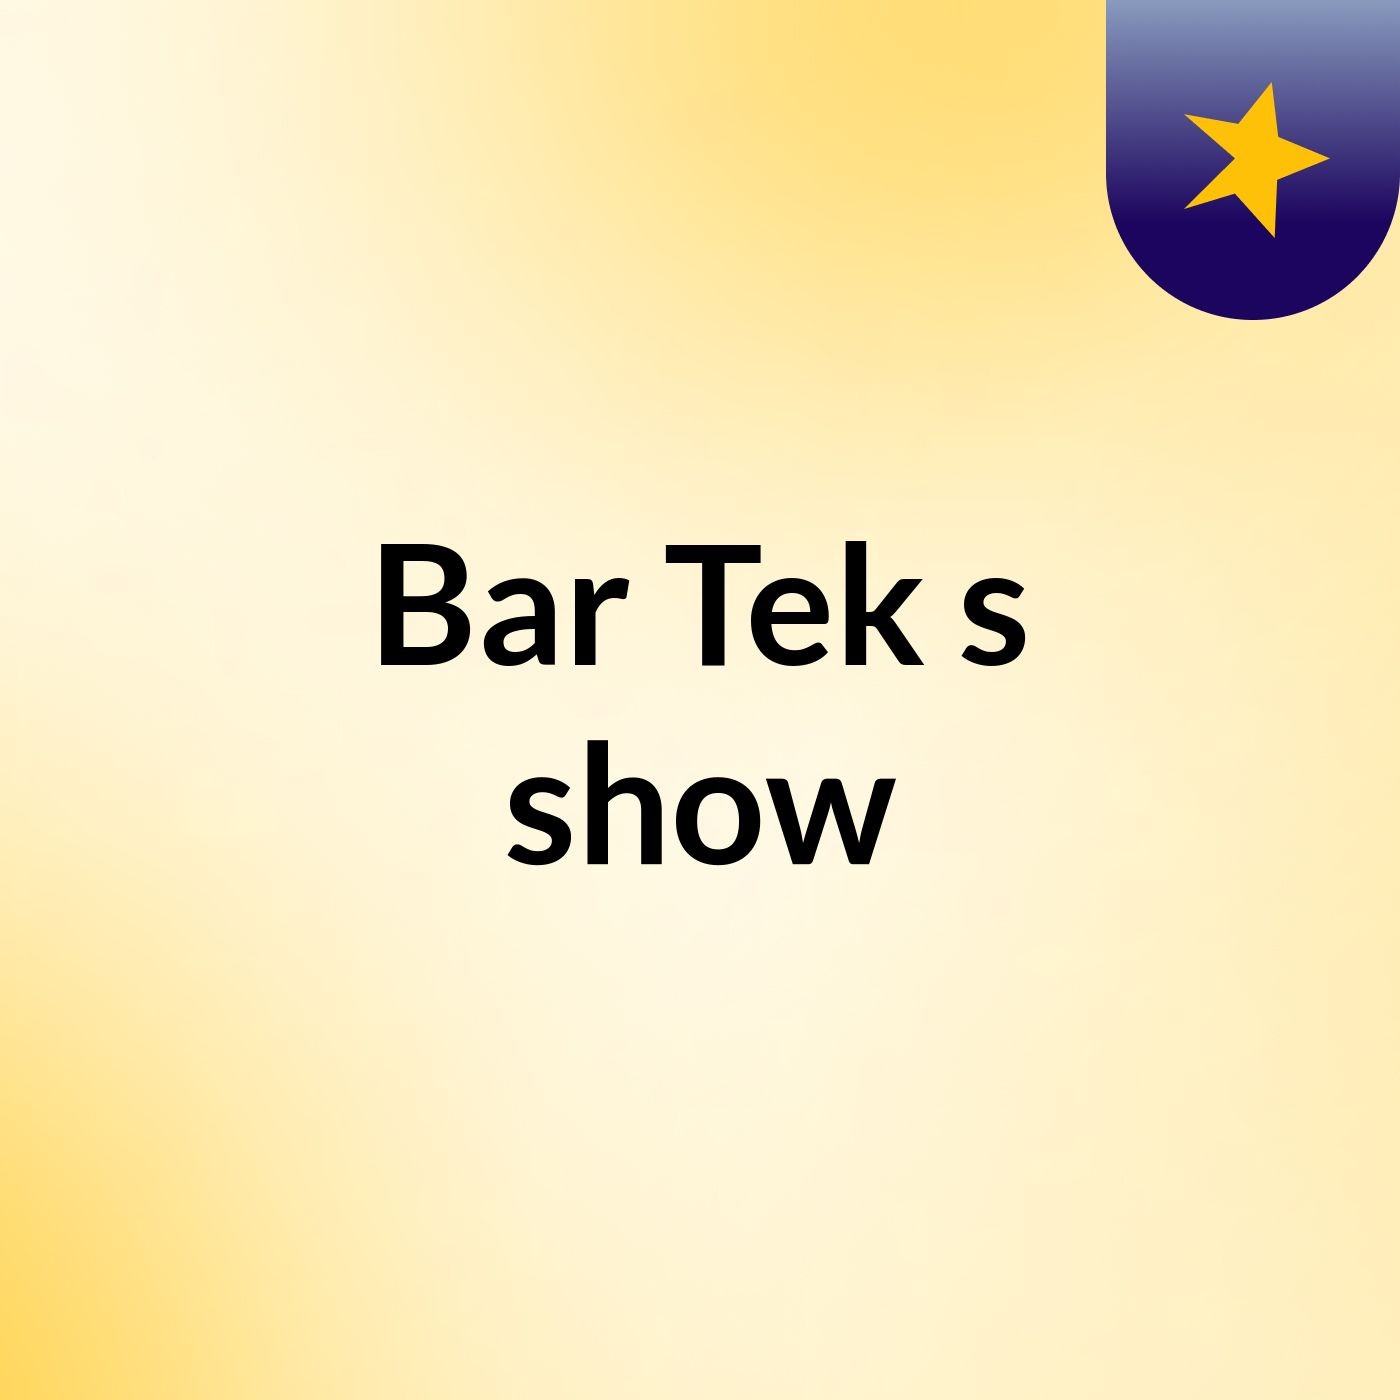 Bar Tek's show